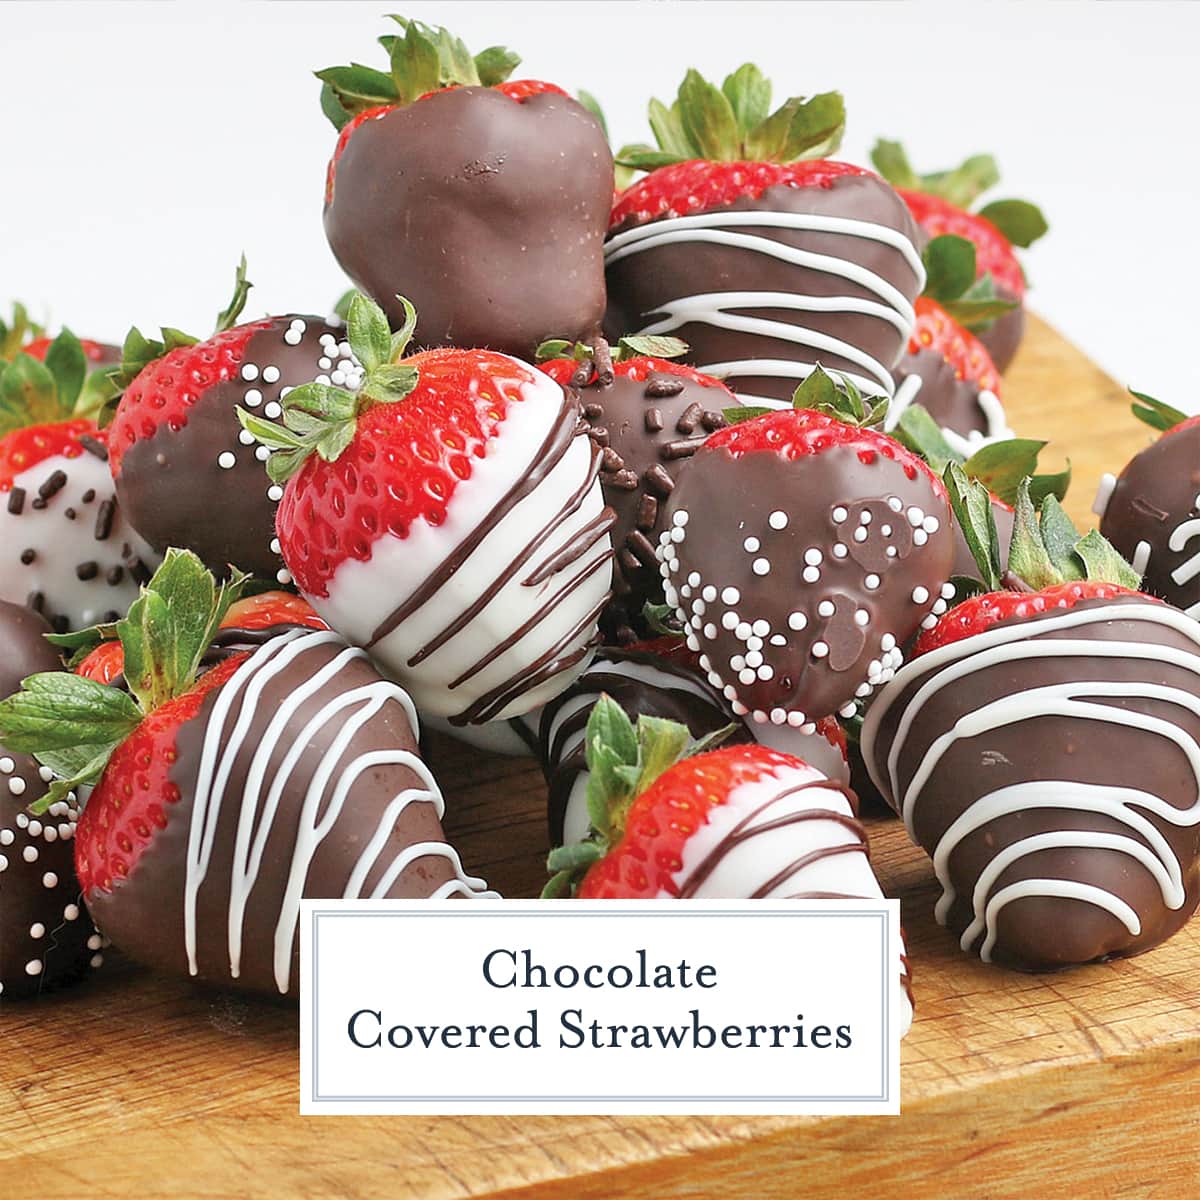 How to Make White Chocolate Covered Strawberries